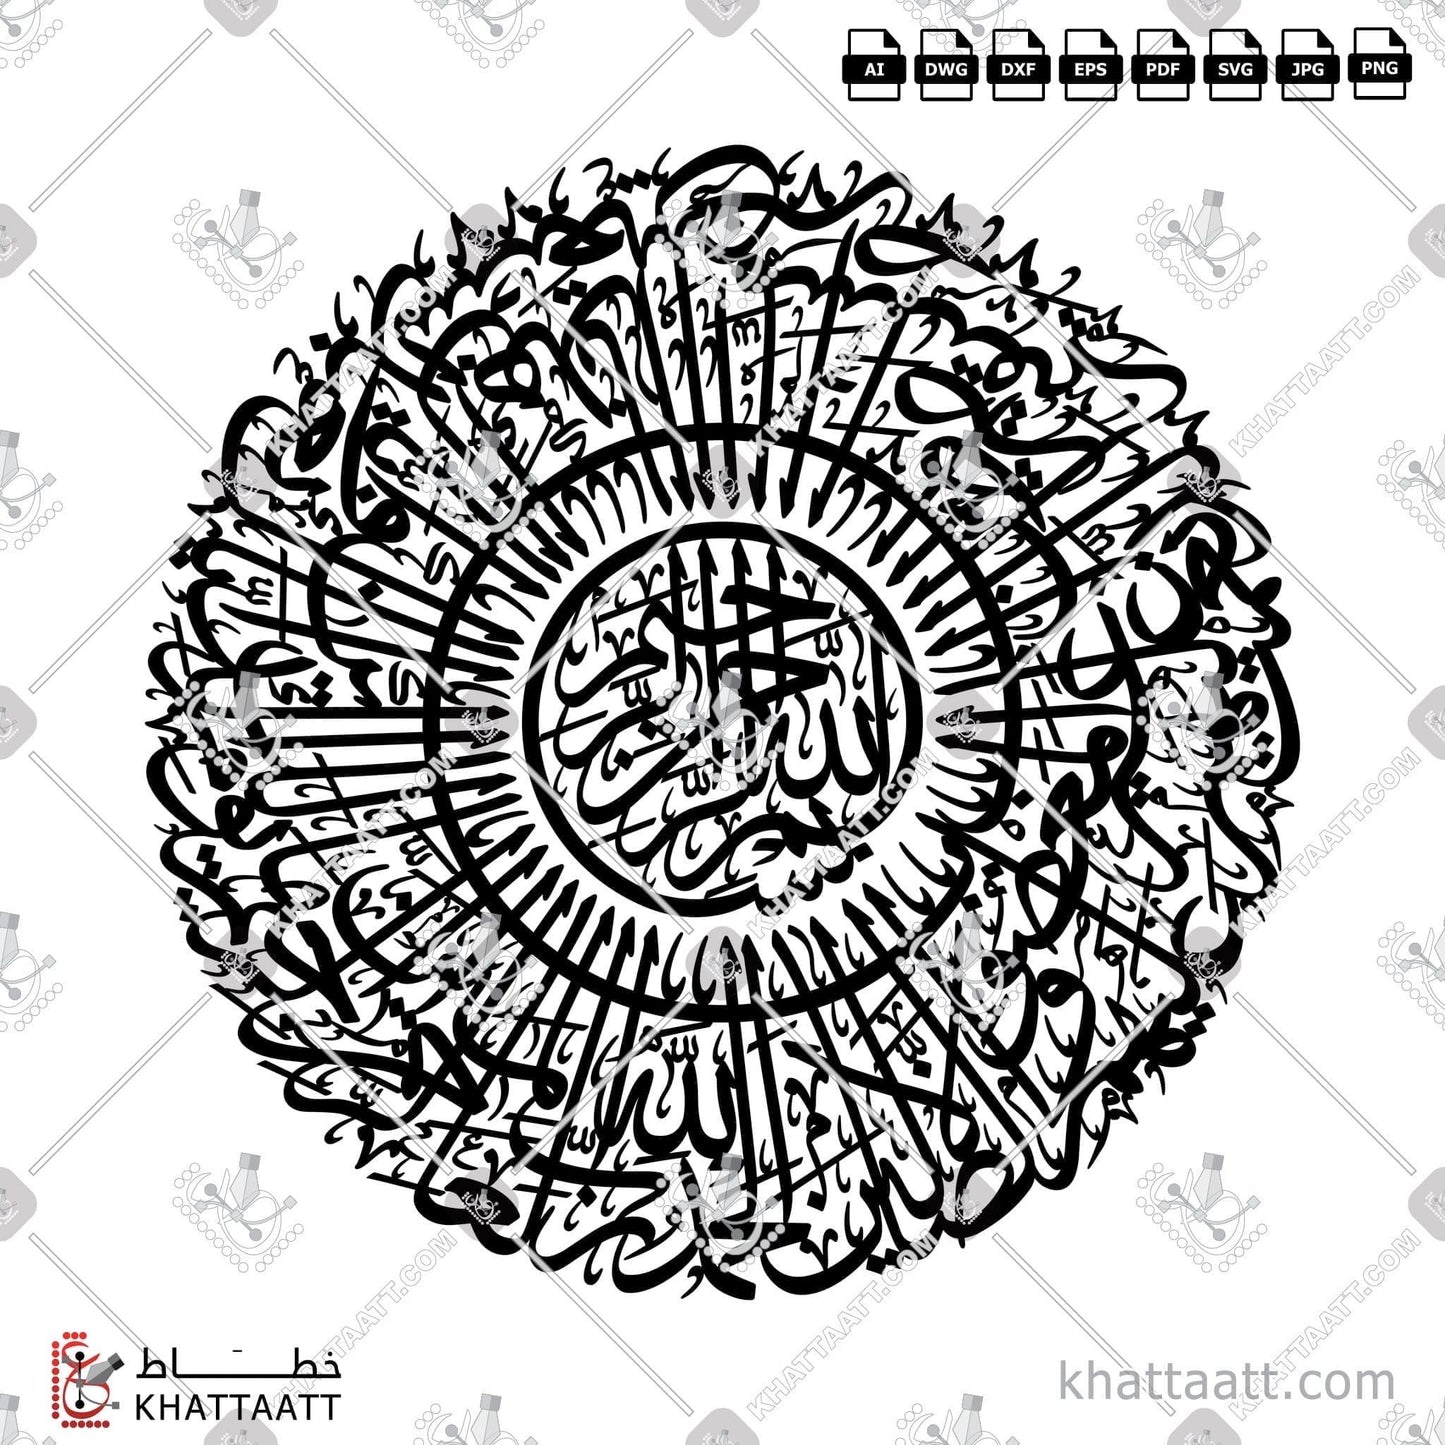 Digital Arabic calligraphy vector of Surat Al-Fatiha - سورة الفاتحة in Thuluth - خط الثلث